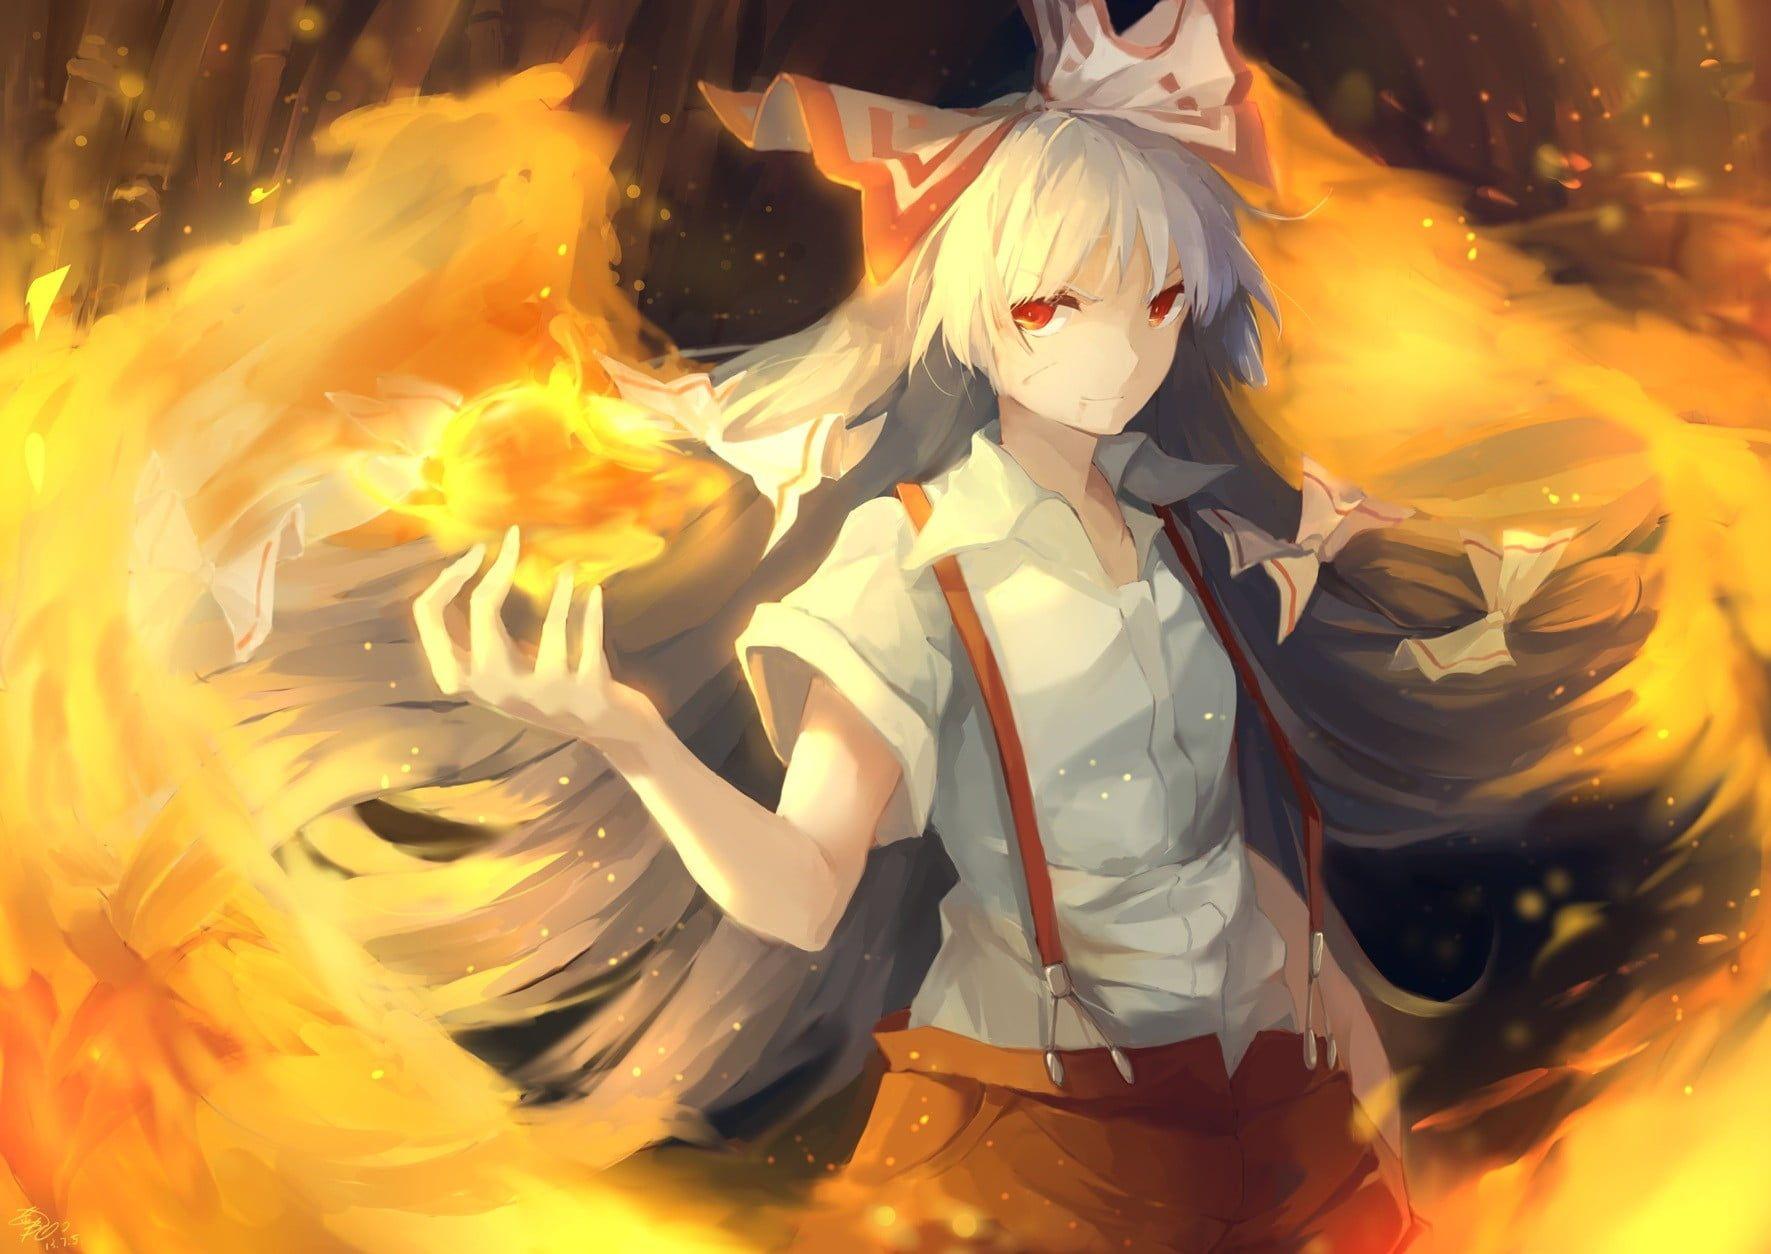 demon slayer tanjiro kamado with sharp sword on fire hd animeHD Wallpapers   HD Wallpapers  ID 42534